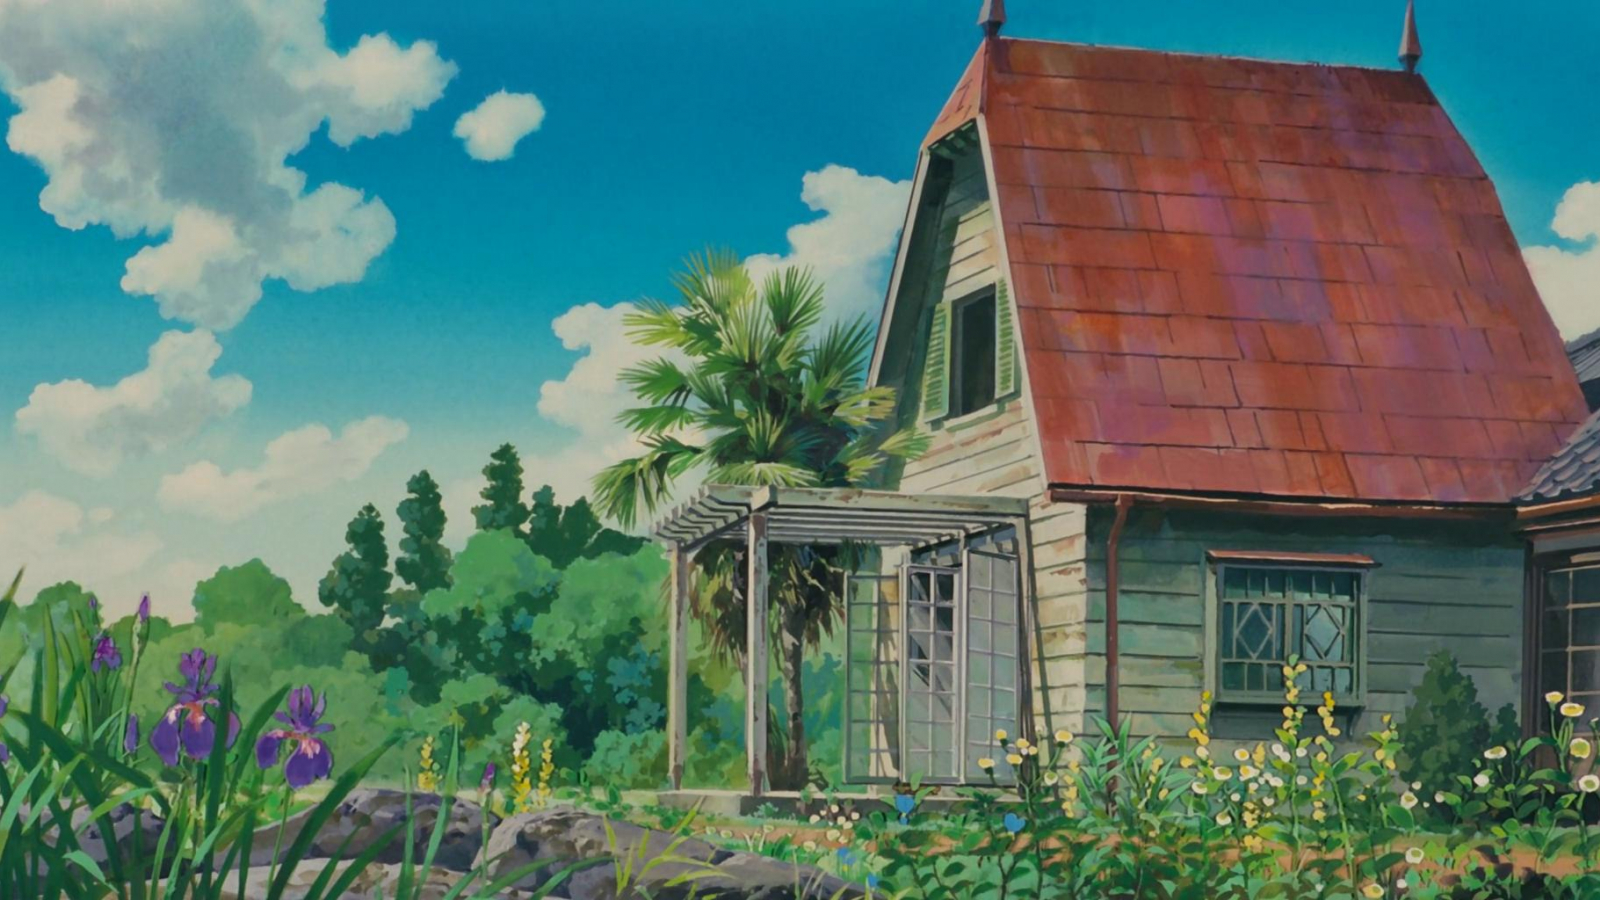 Studio Ghibli Aesthetic Wallpapers